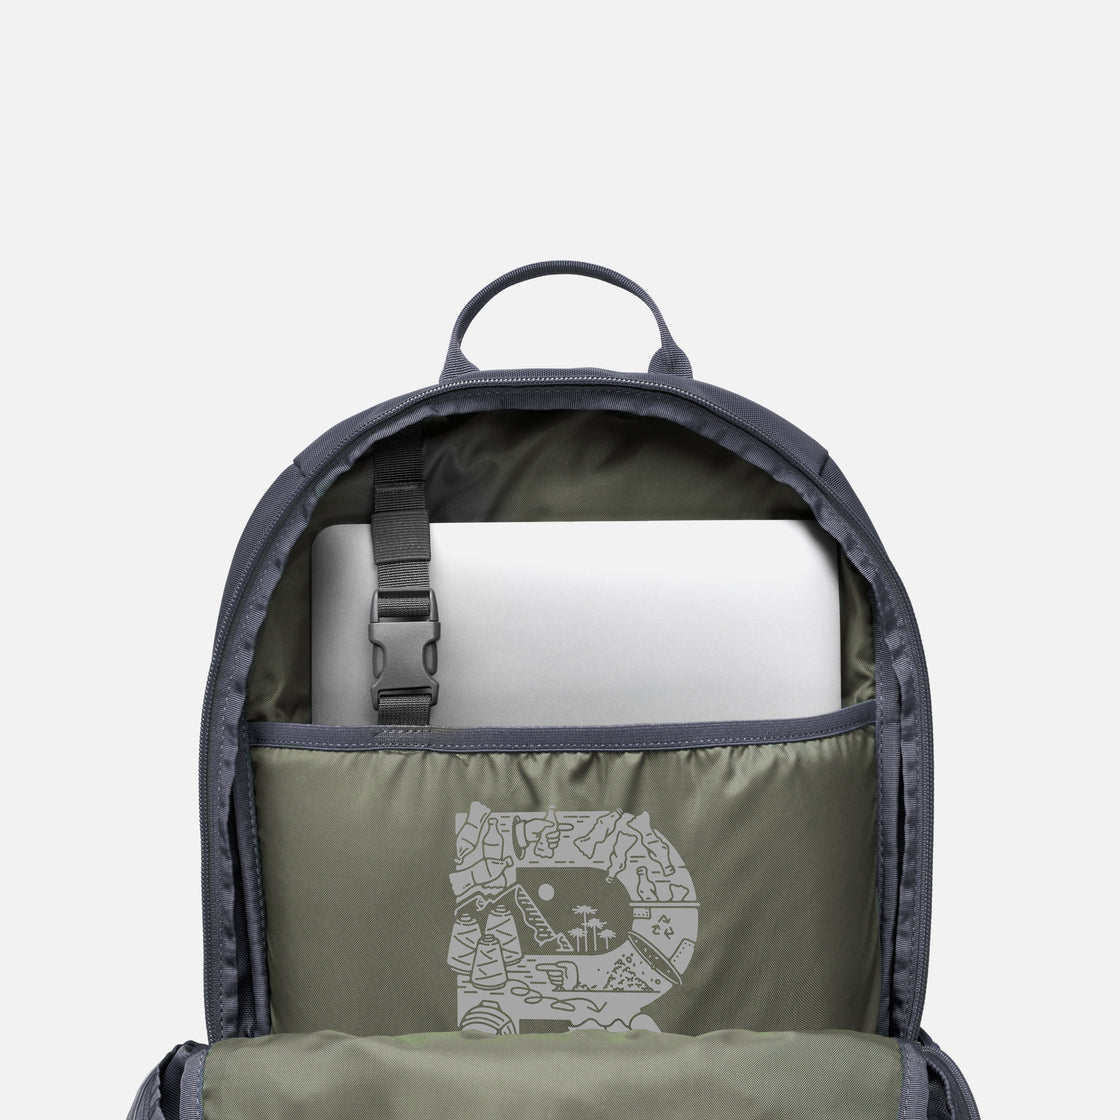 Mochila Unisex R-Bags 22 Backpack Azul Obscuro Lippi